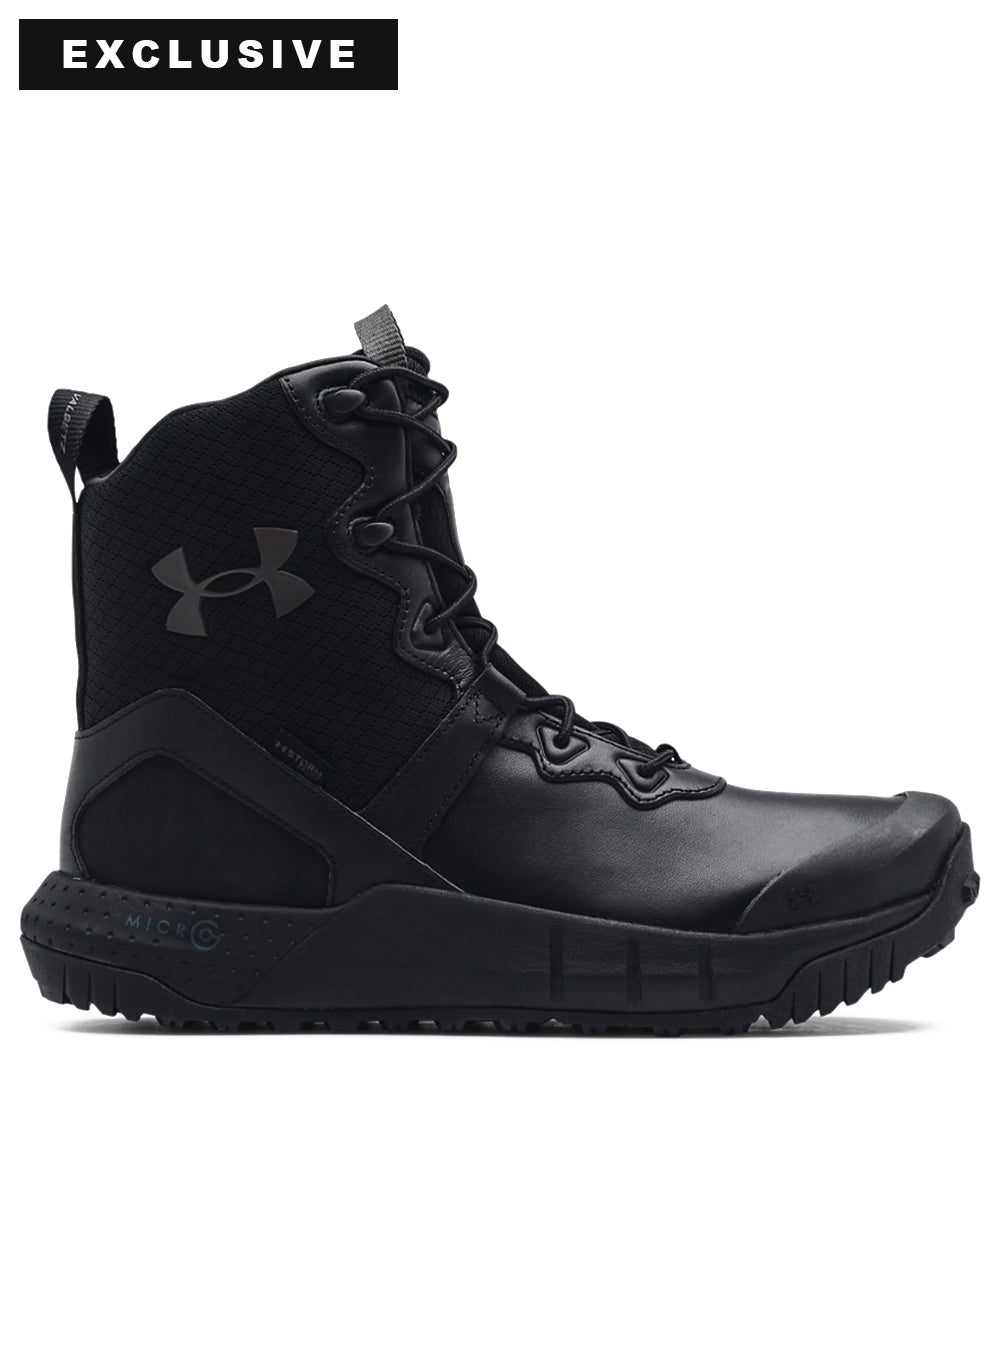 SALE - Under Armour Micro G Valsetz Leather Waterproof Boots